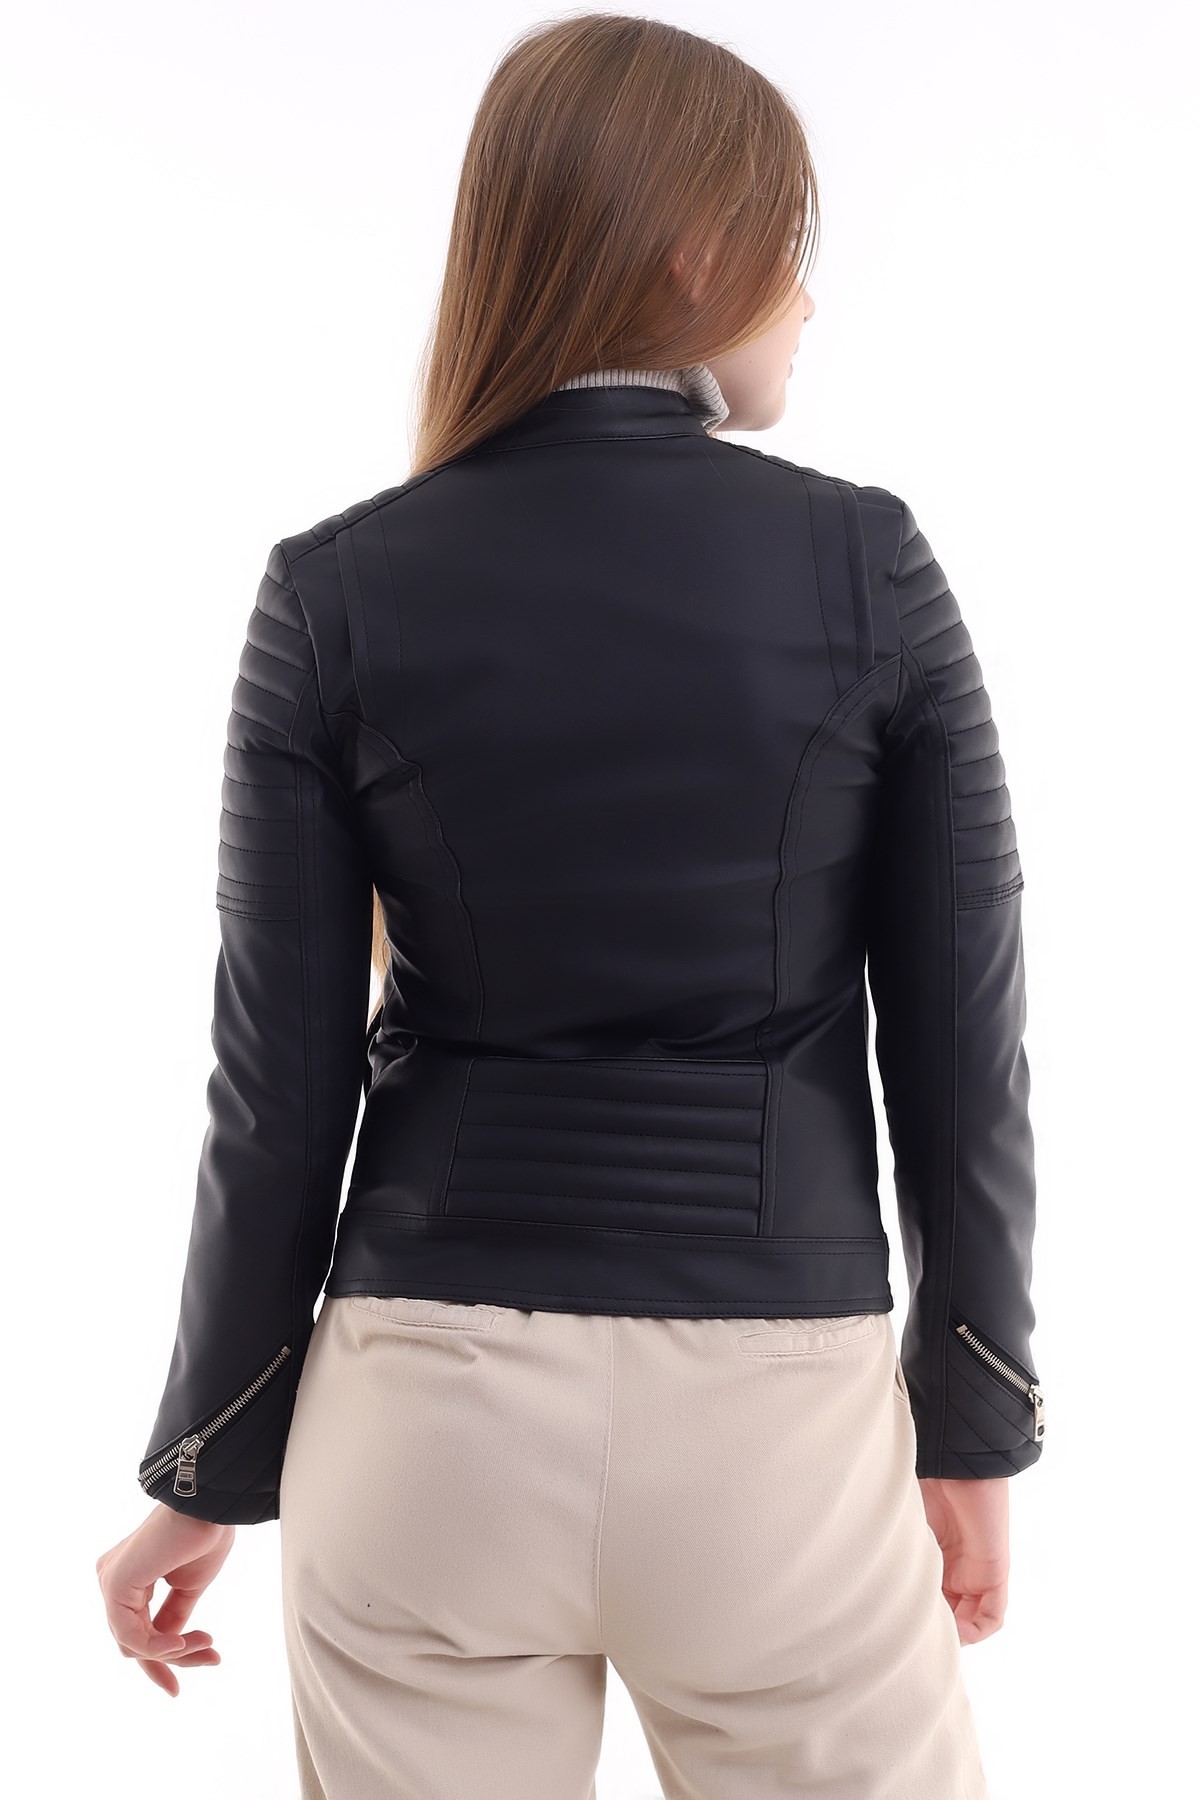 Göğüs Detaylı Kadın Deri Ceket Siyah CRB7501S